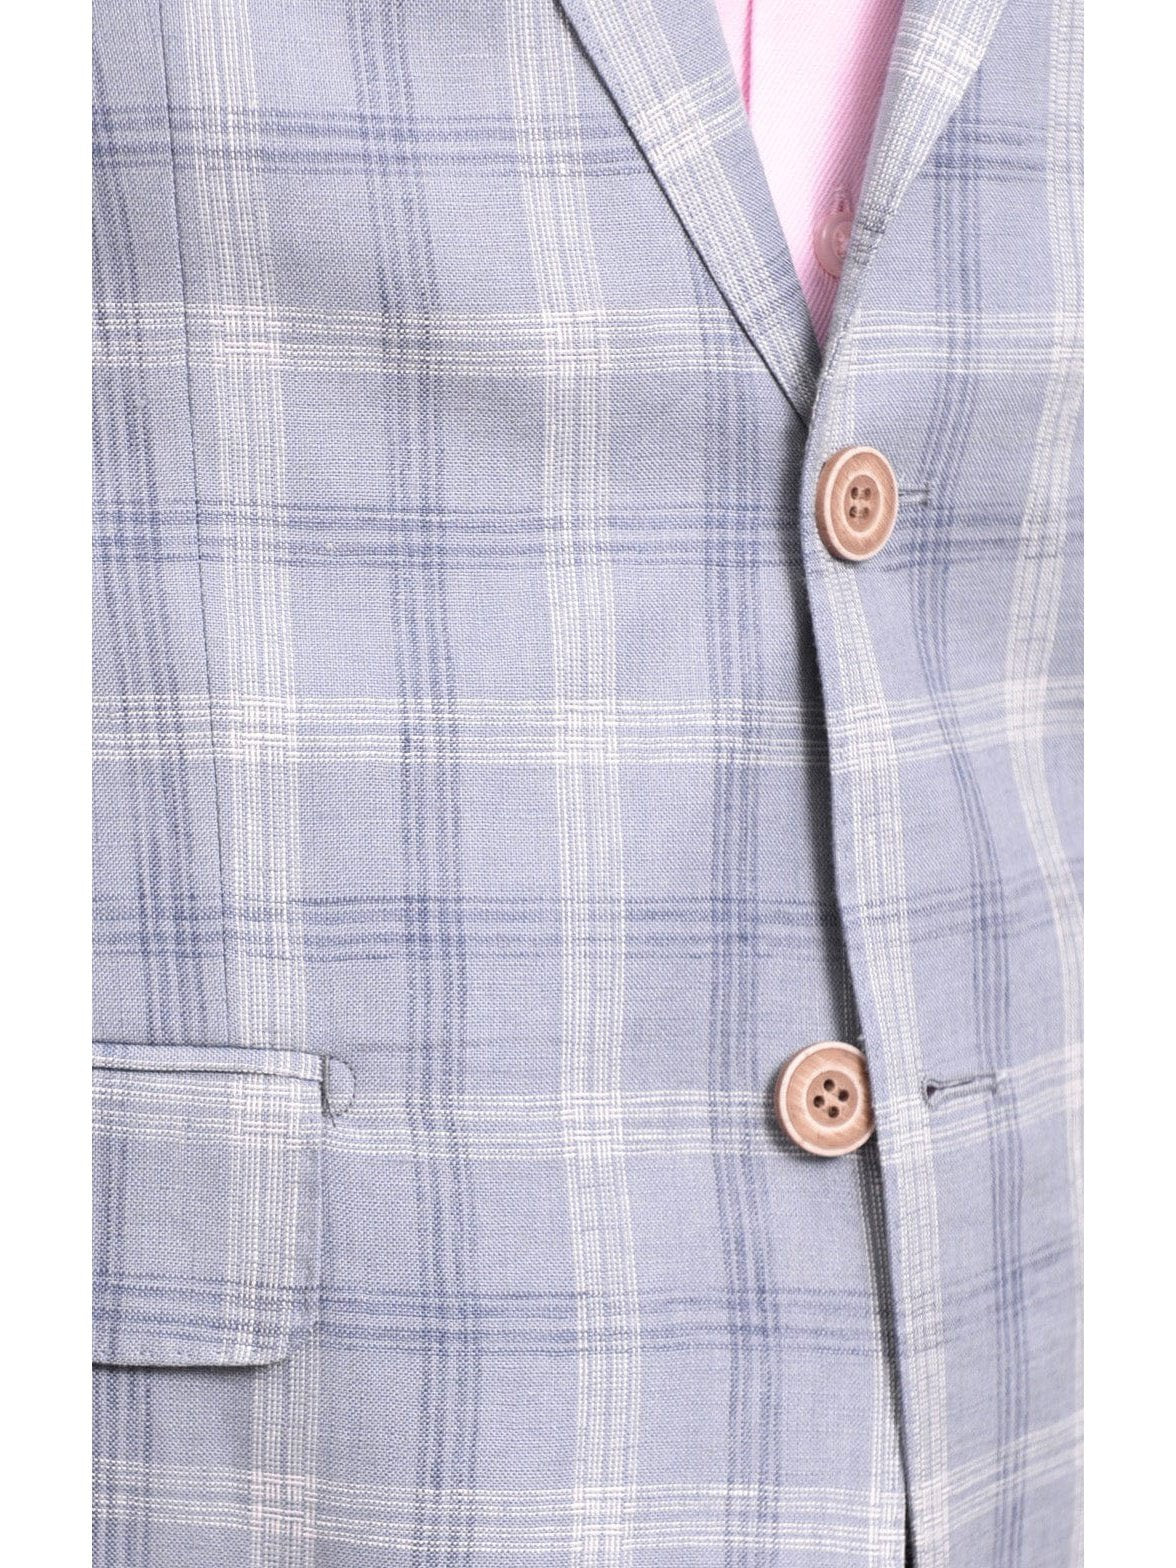 Label E BLAZERS Mens Classic Fit Blue &amp; White Plaid Two Button Linen Blazer Sportcoat